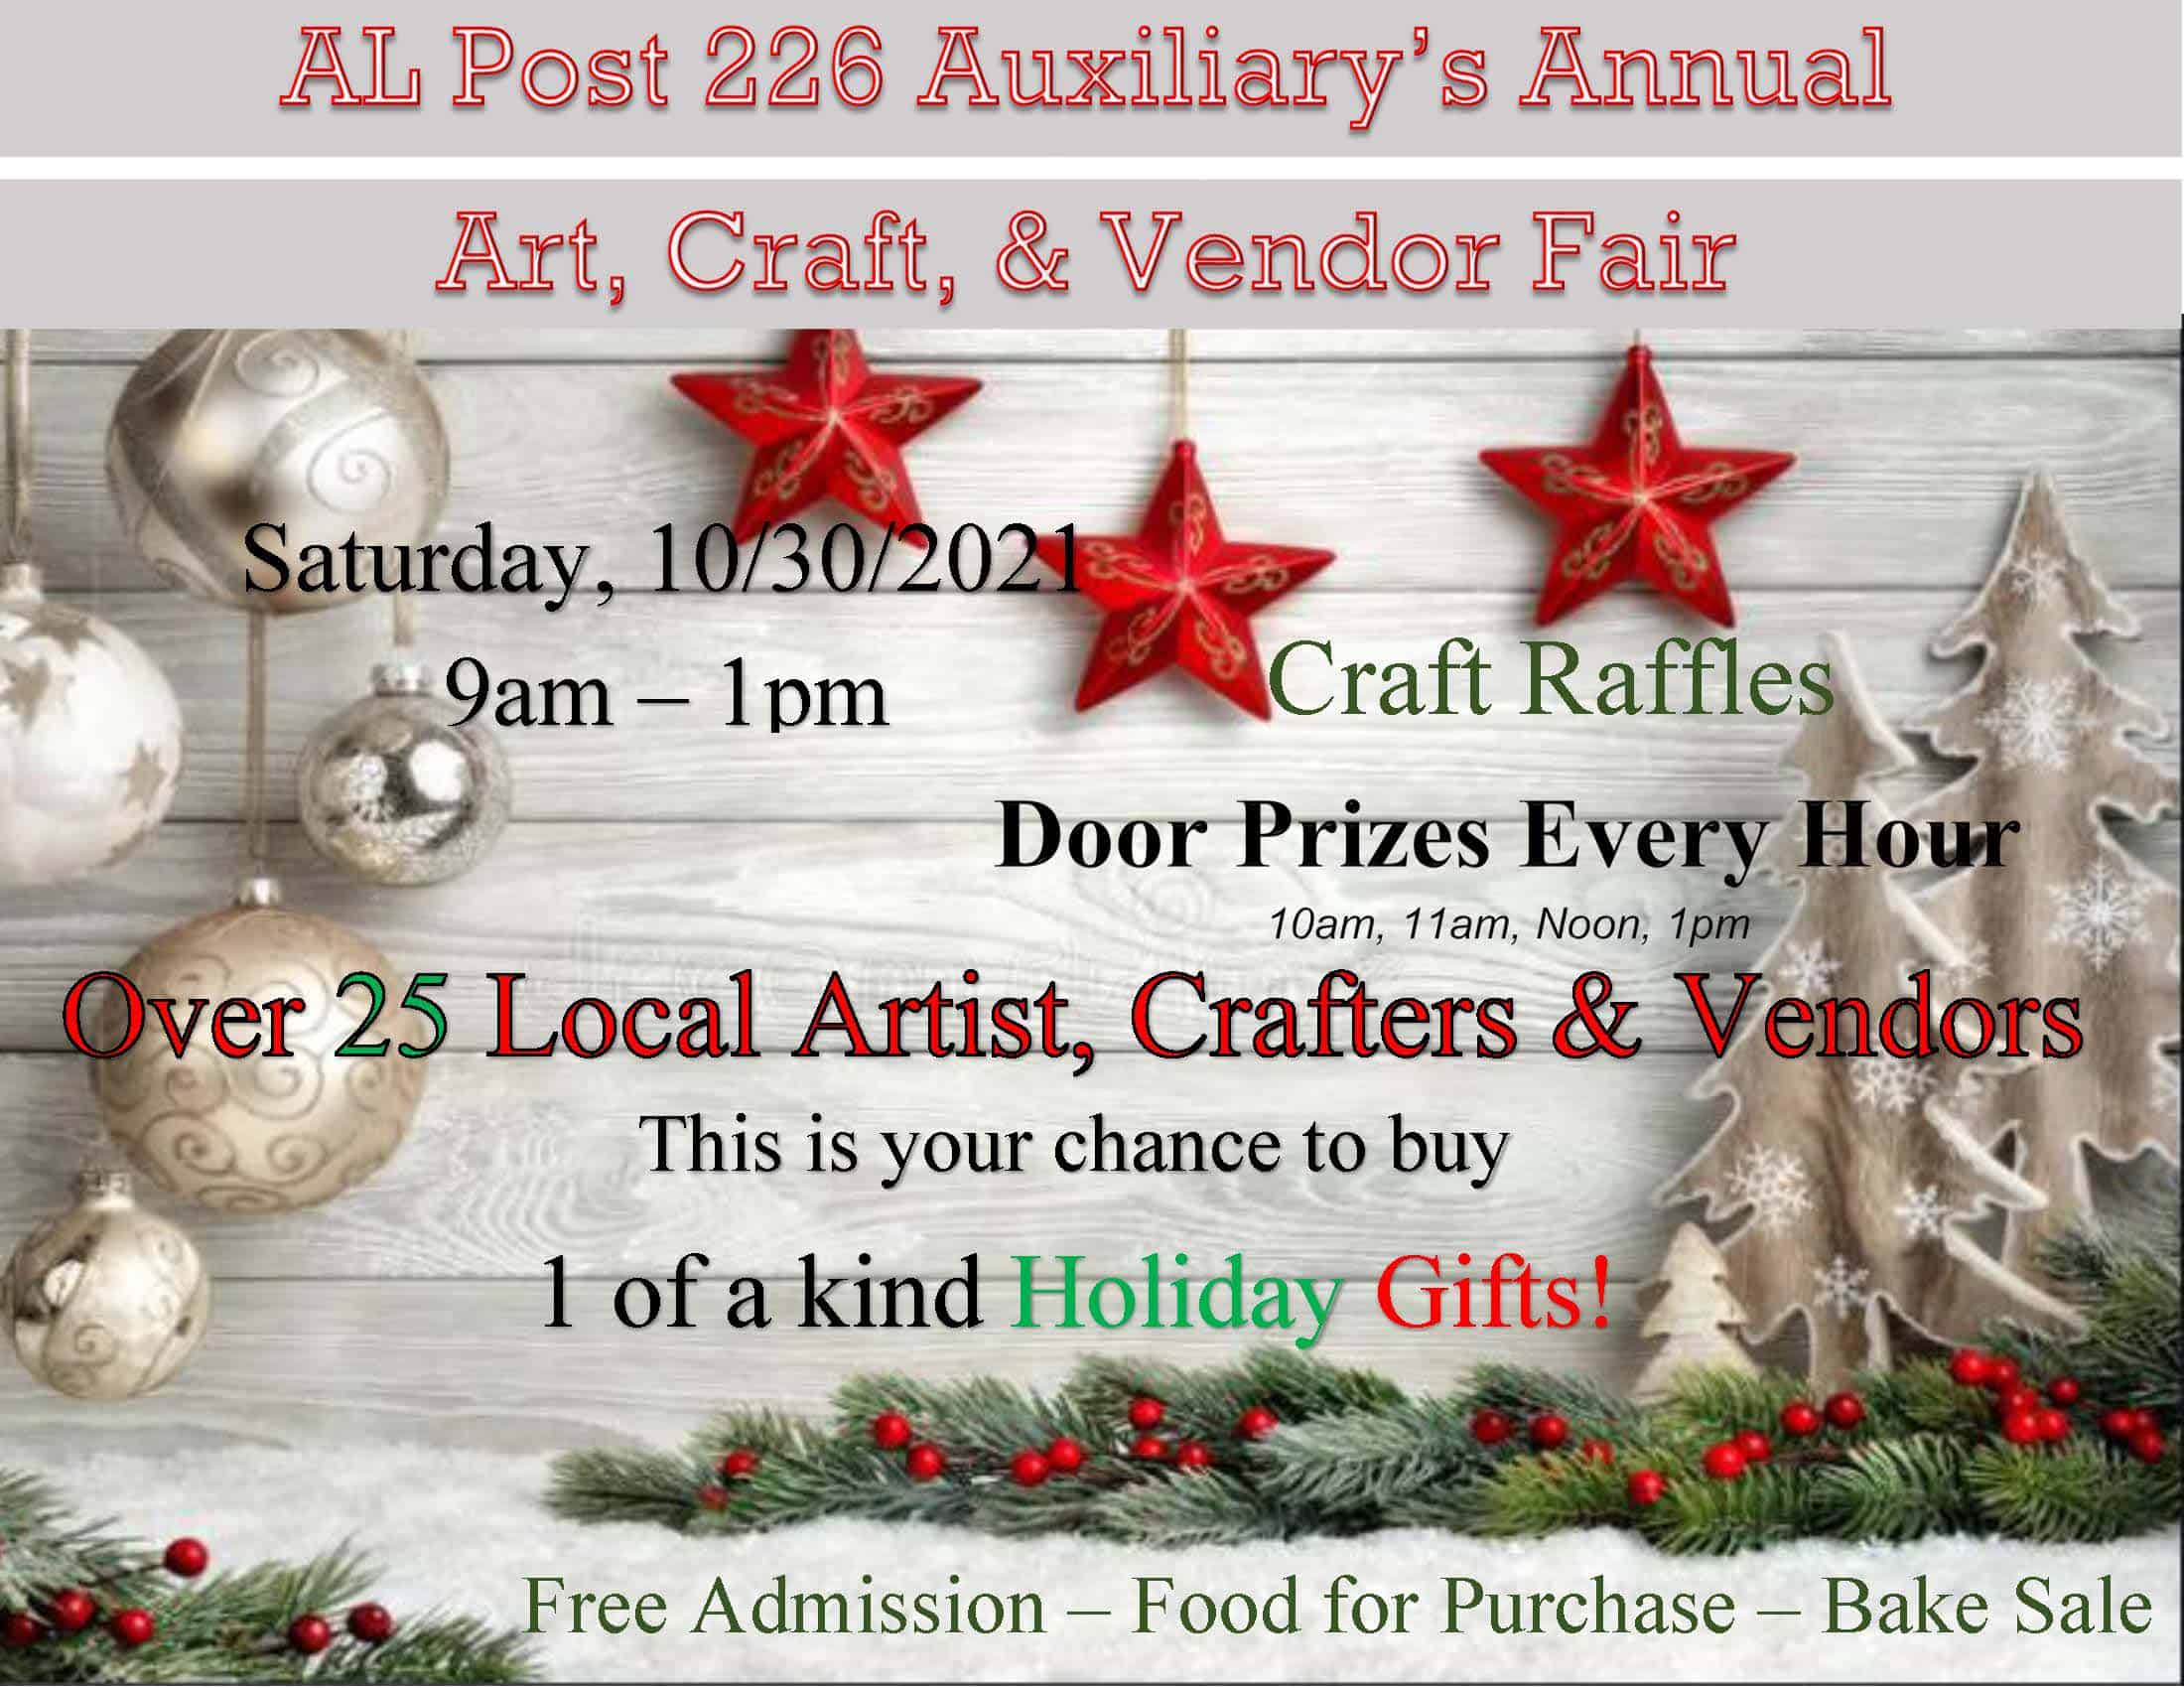 Annual Art, Craft, & Vendor Fair at American Legion Post 226 - Bay Weekly